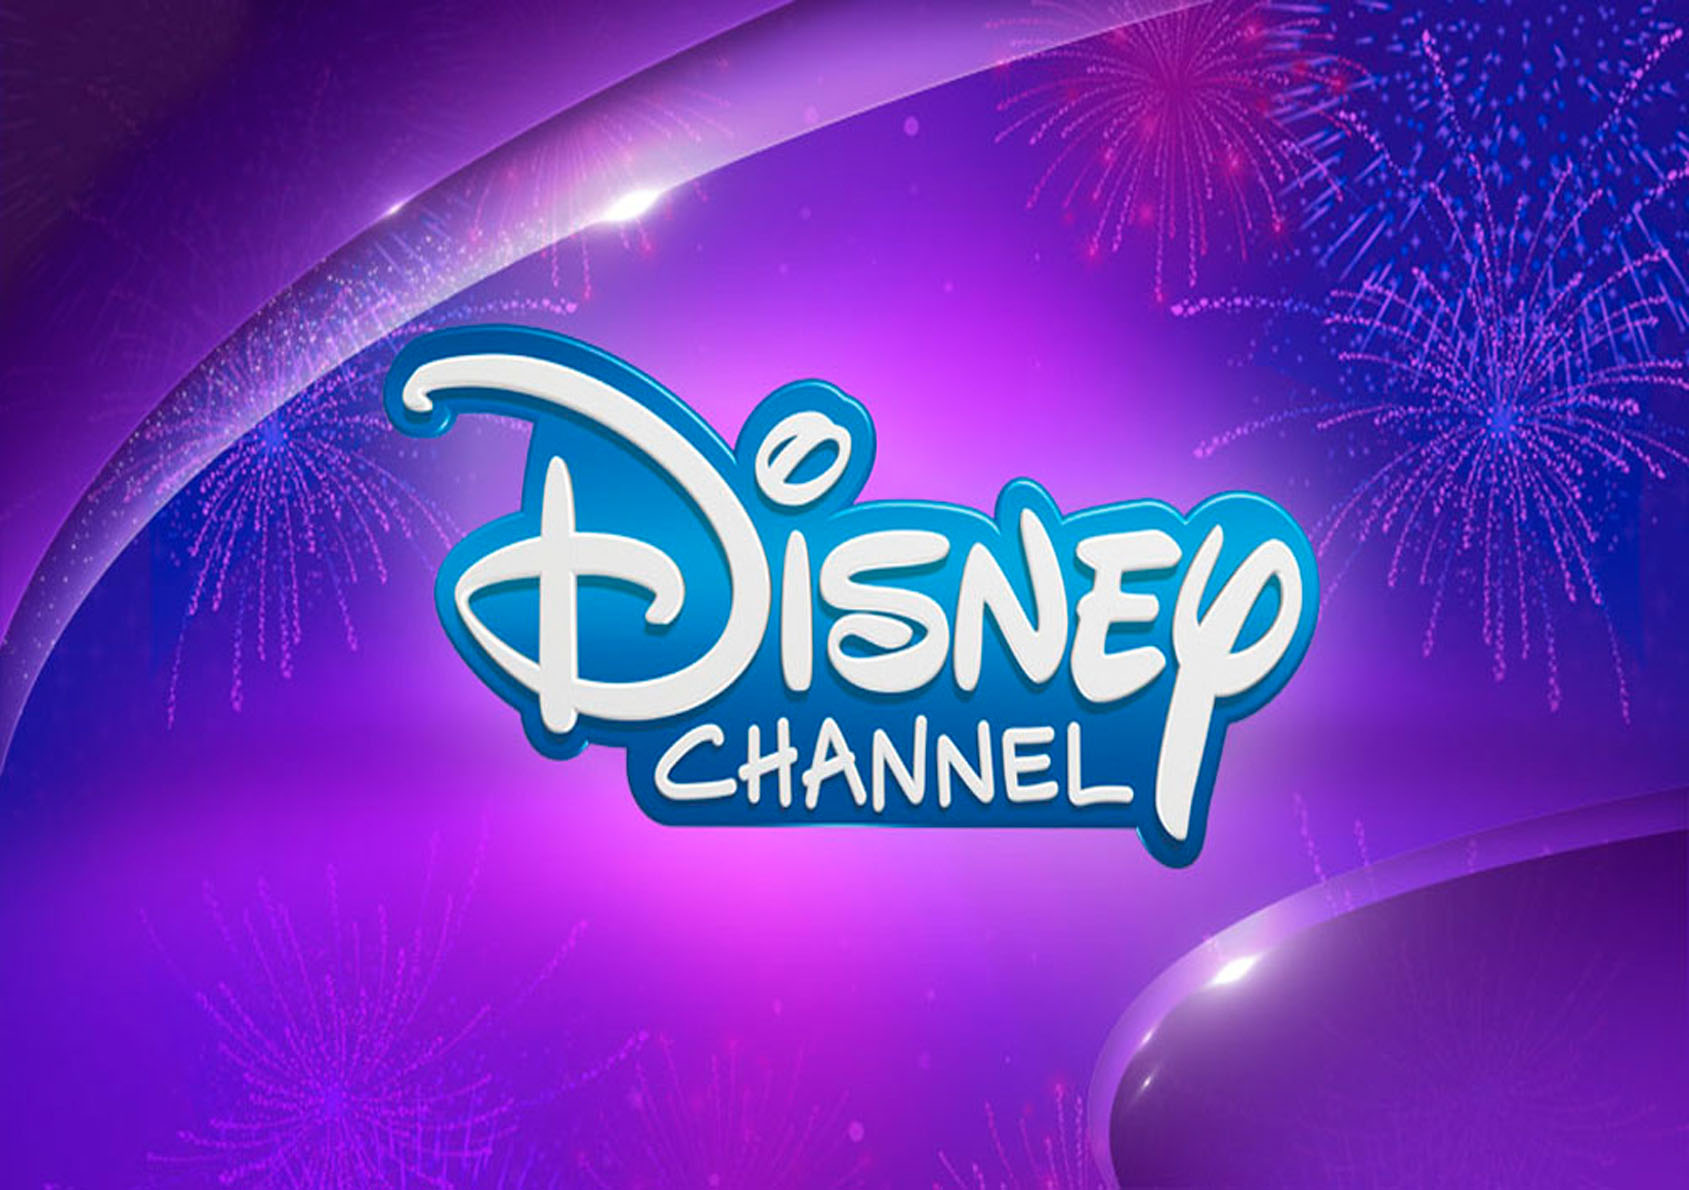 Канал дисней сегодня. Канал Дисней. Канал Дисней картинки. Логотип Disney channel. Дисней Телеканал логотип.